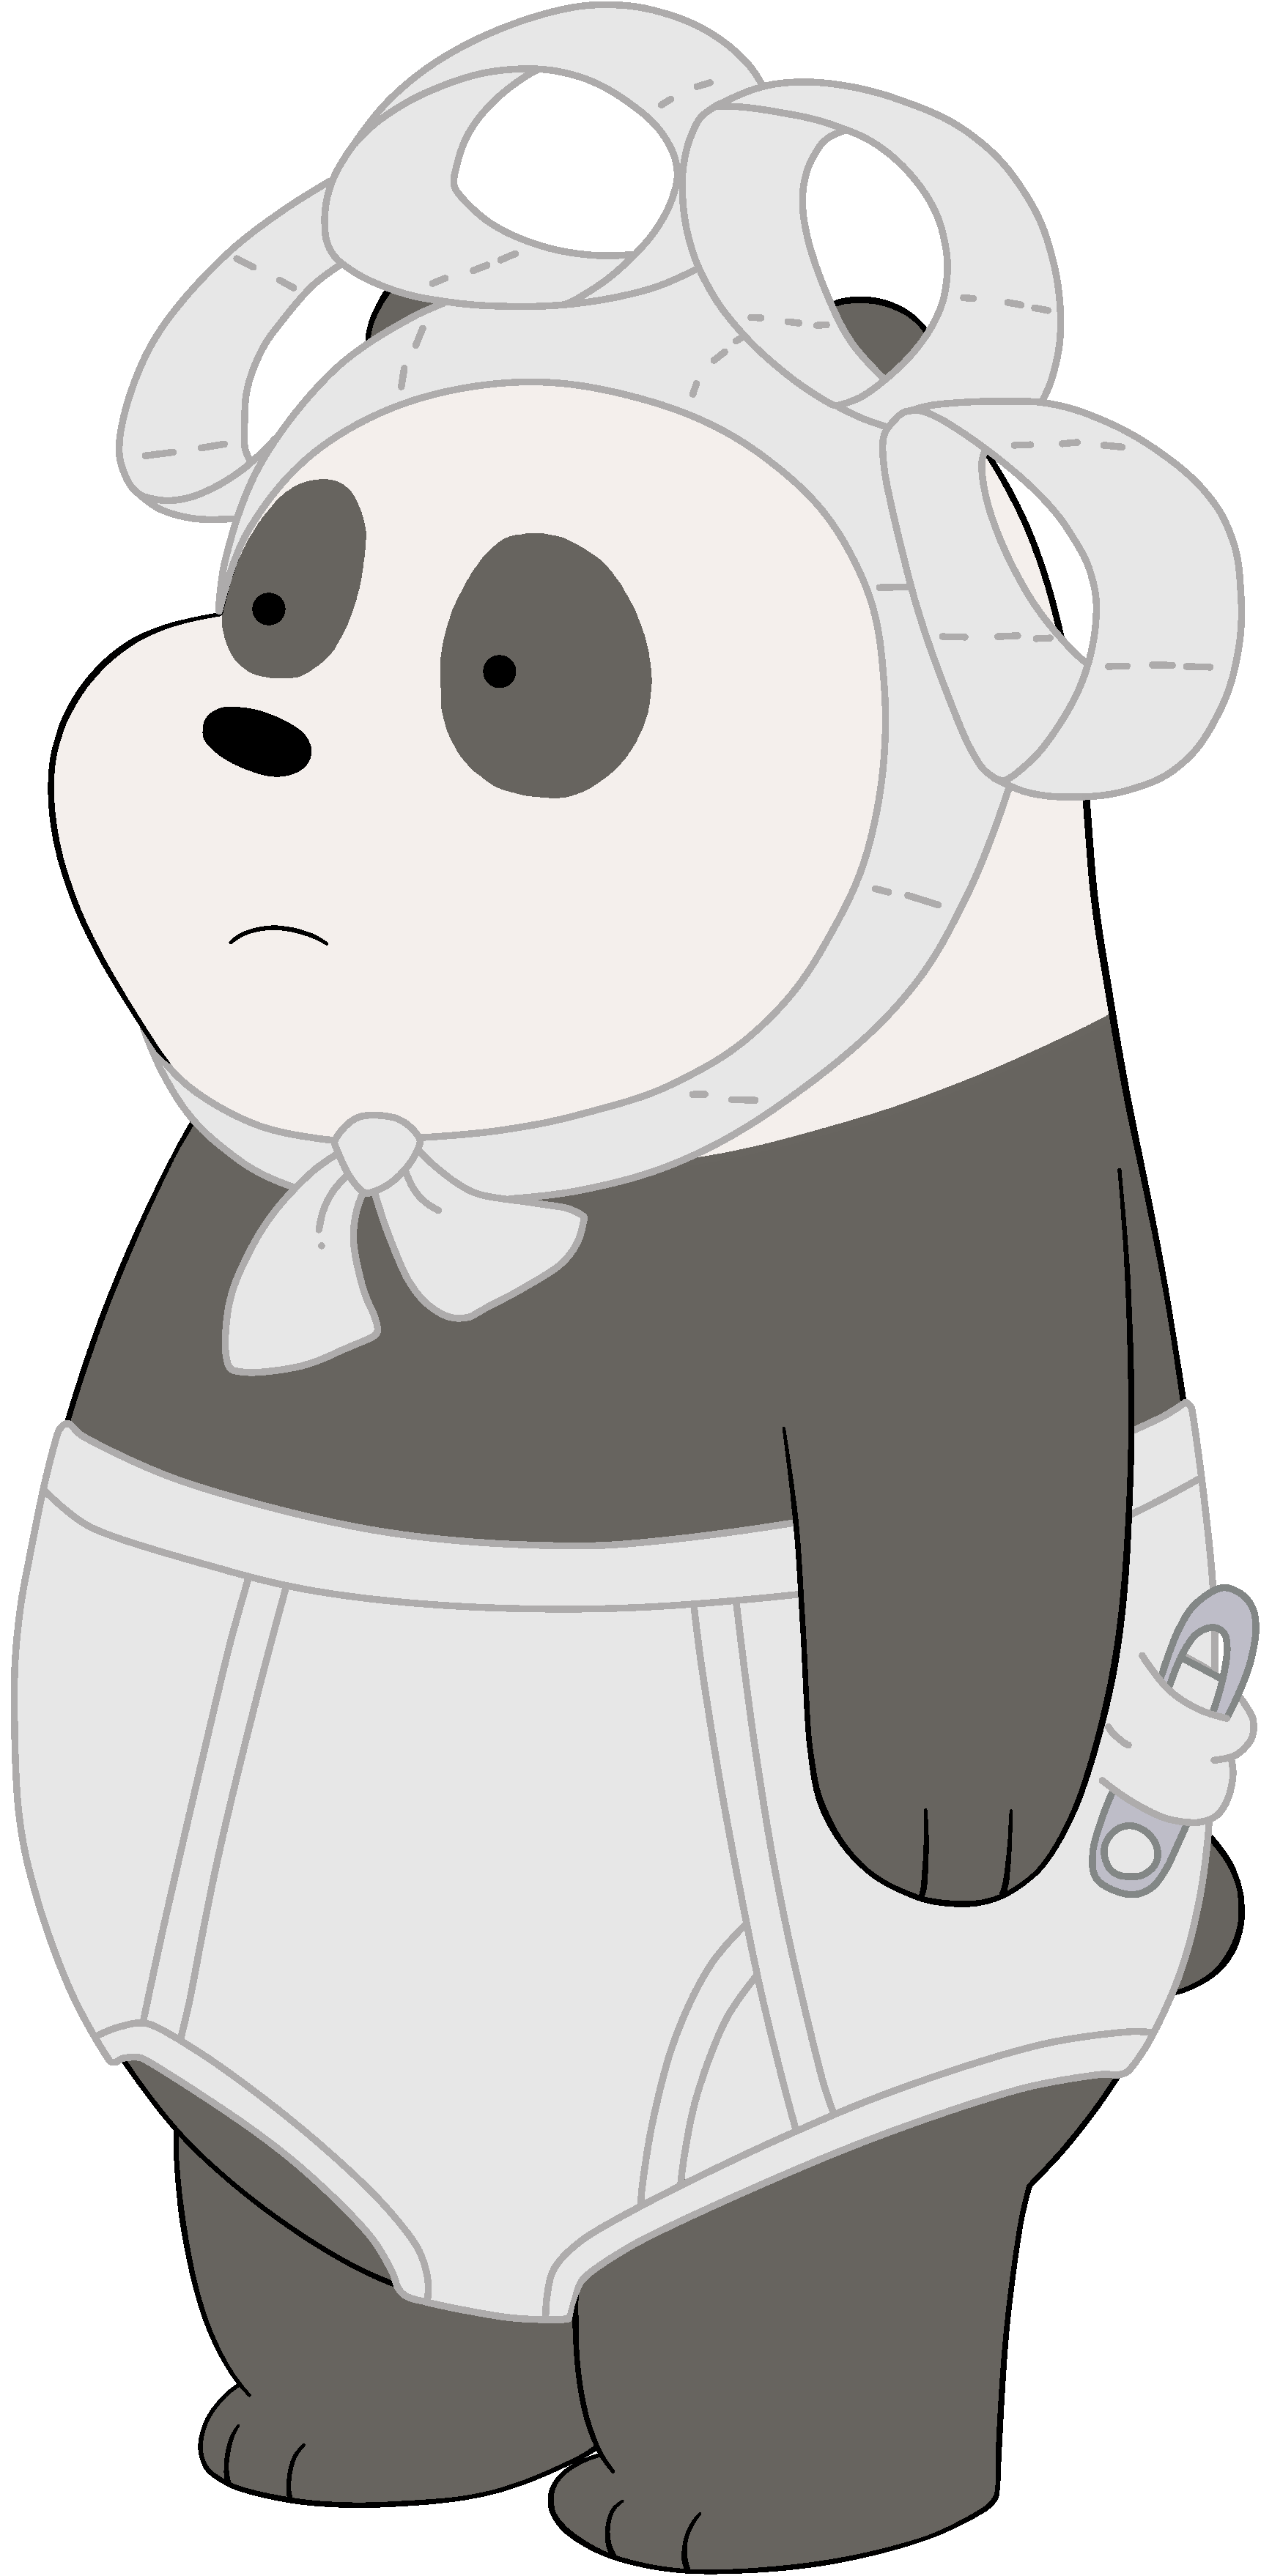 Clipart panda we bare bears. Image diaper png wiki